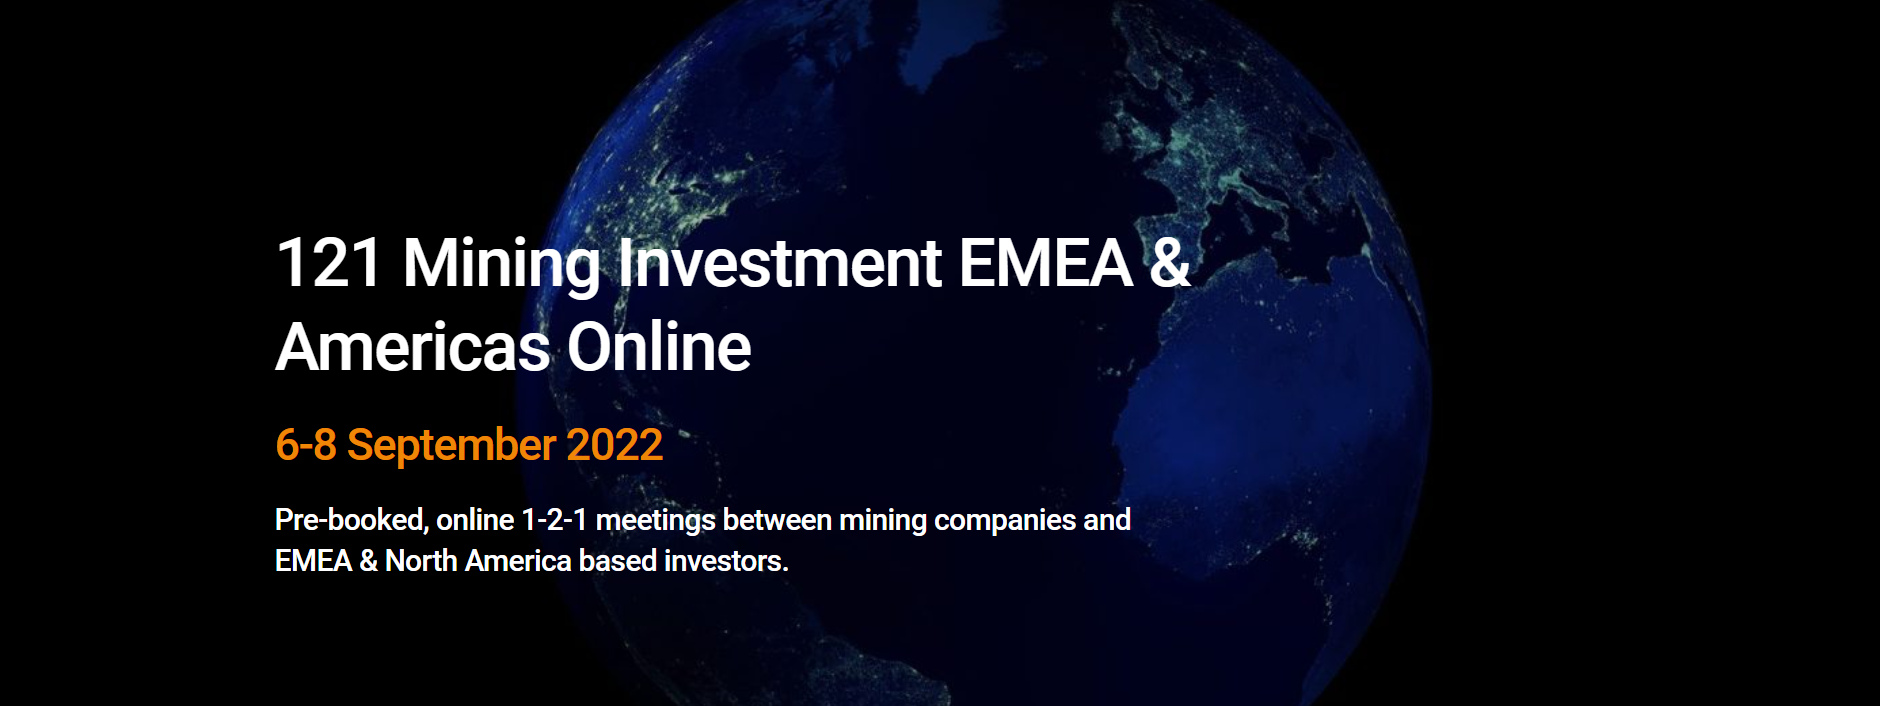 Mining Investment EMEA & Americas